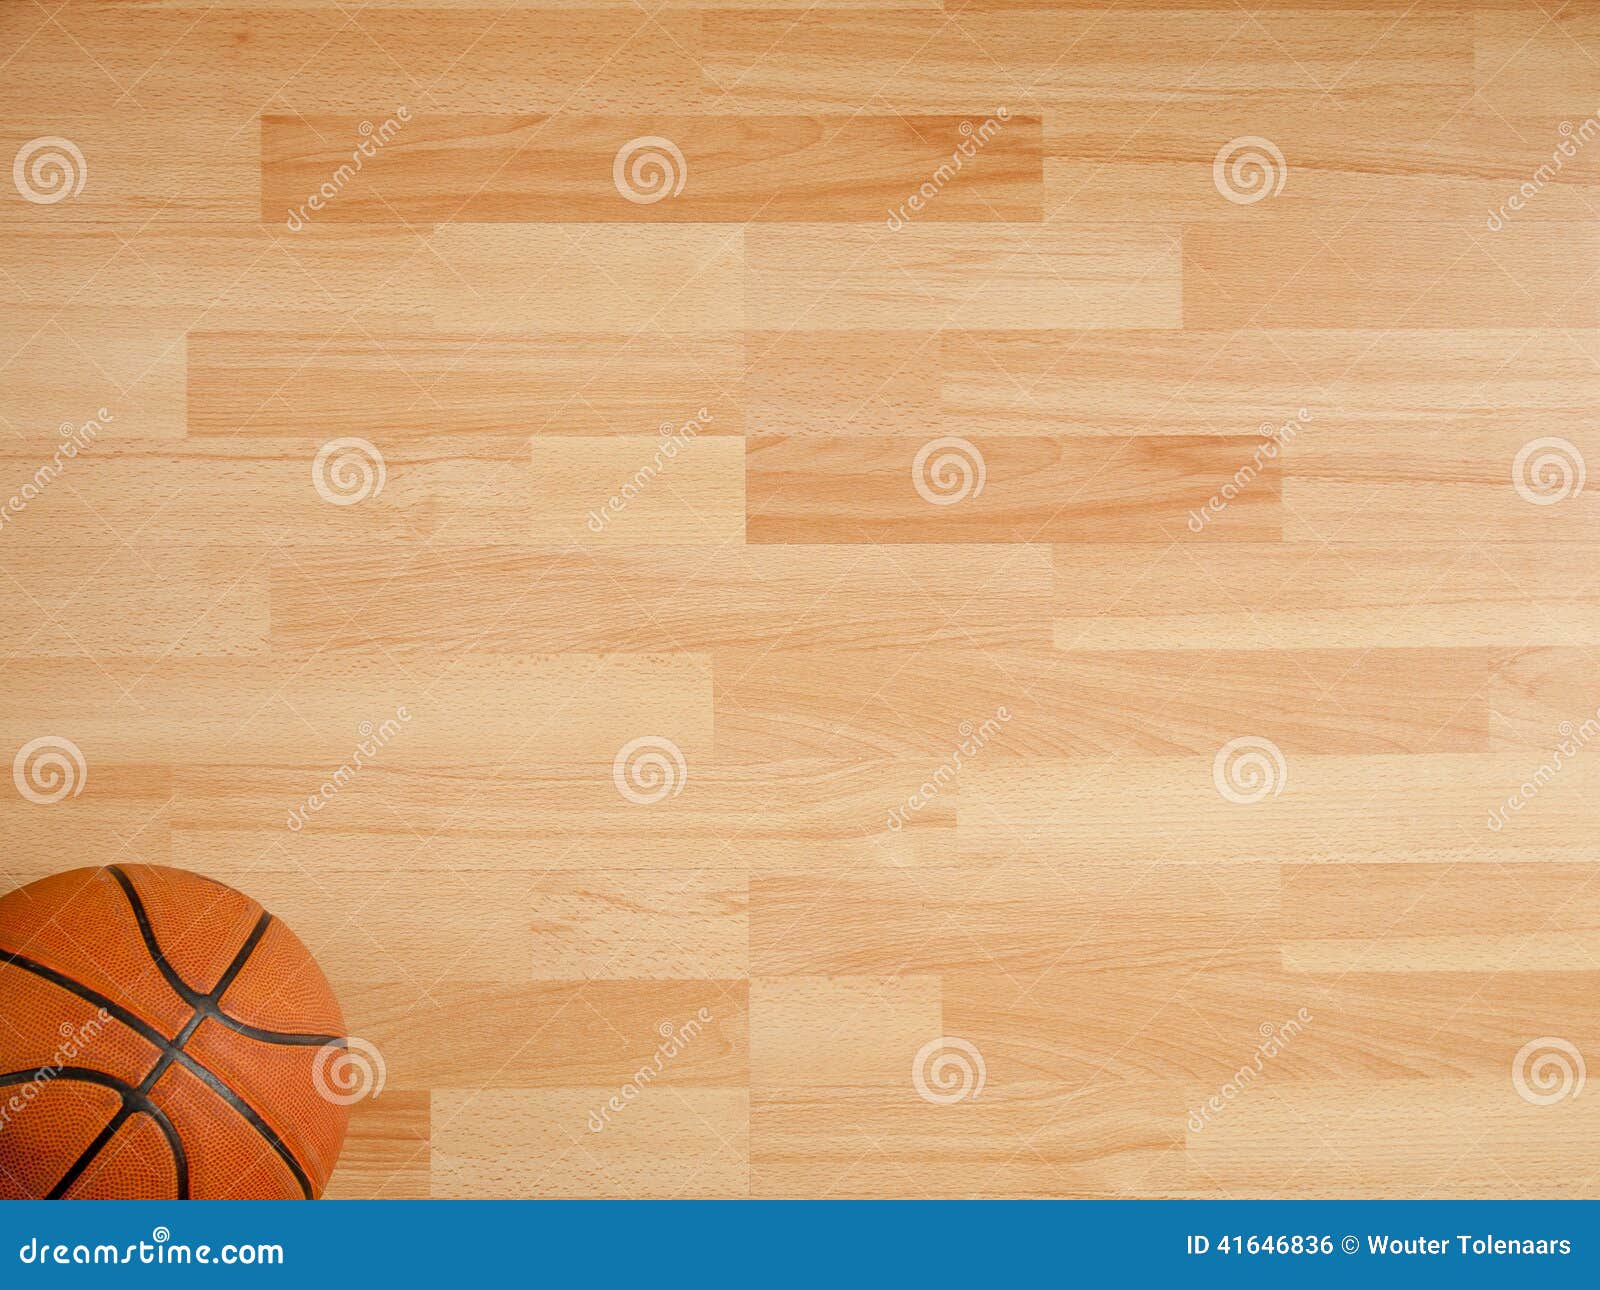 an official orange ball on a basketball court